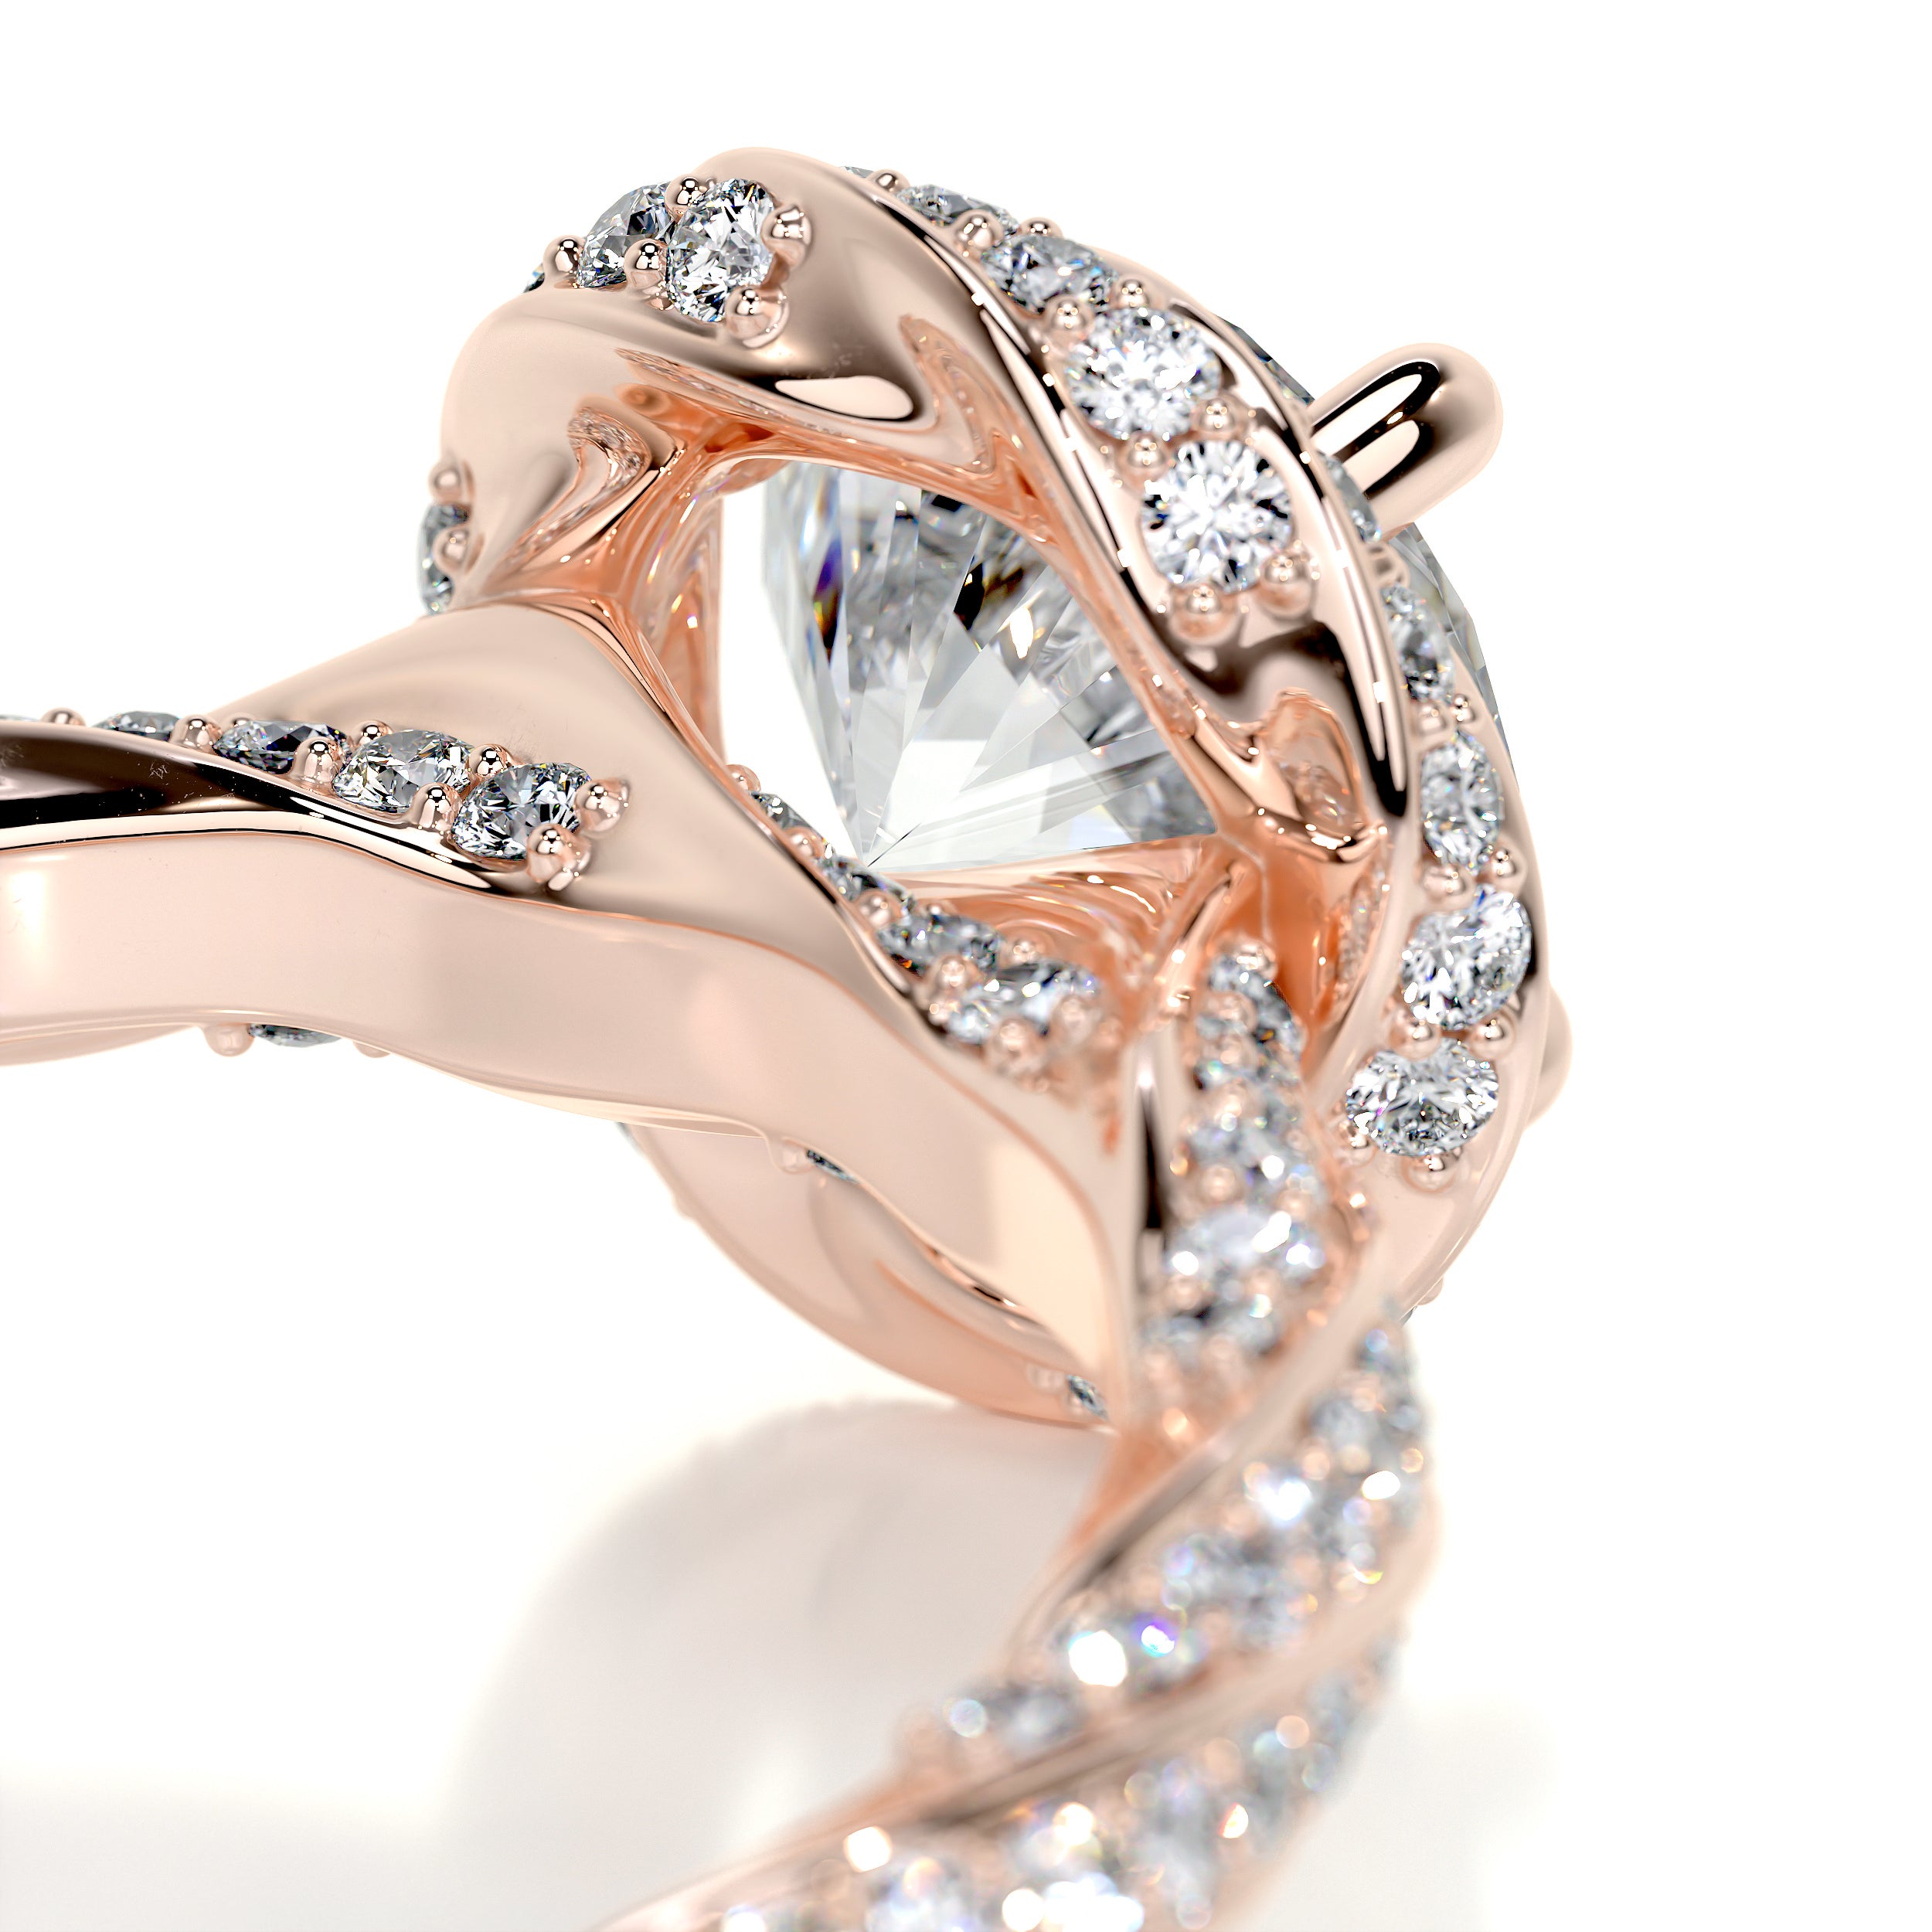 Joanne Diamond Engagement Ring   (1.50 Carat) -14K Rose Gold